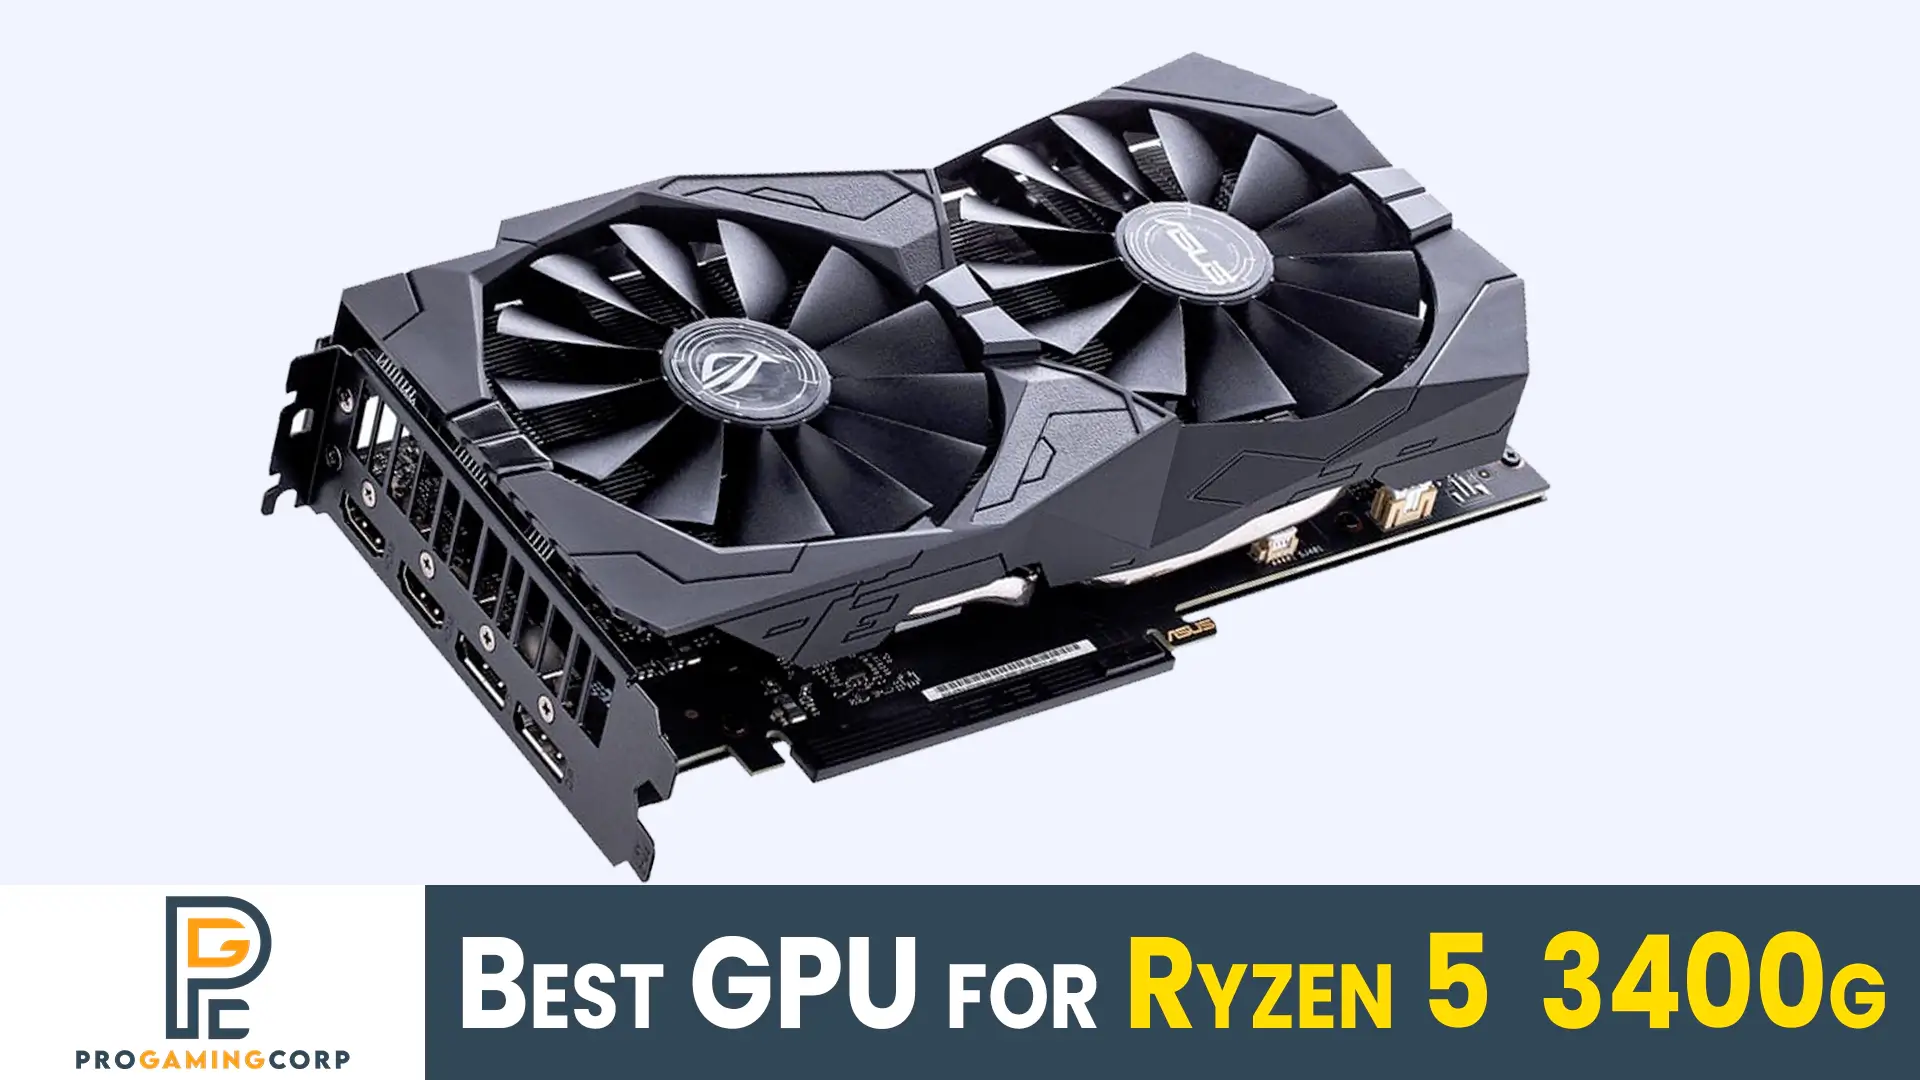 Best GPU for Ryzen 5 3400g